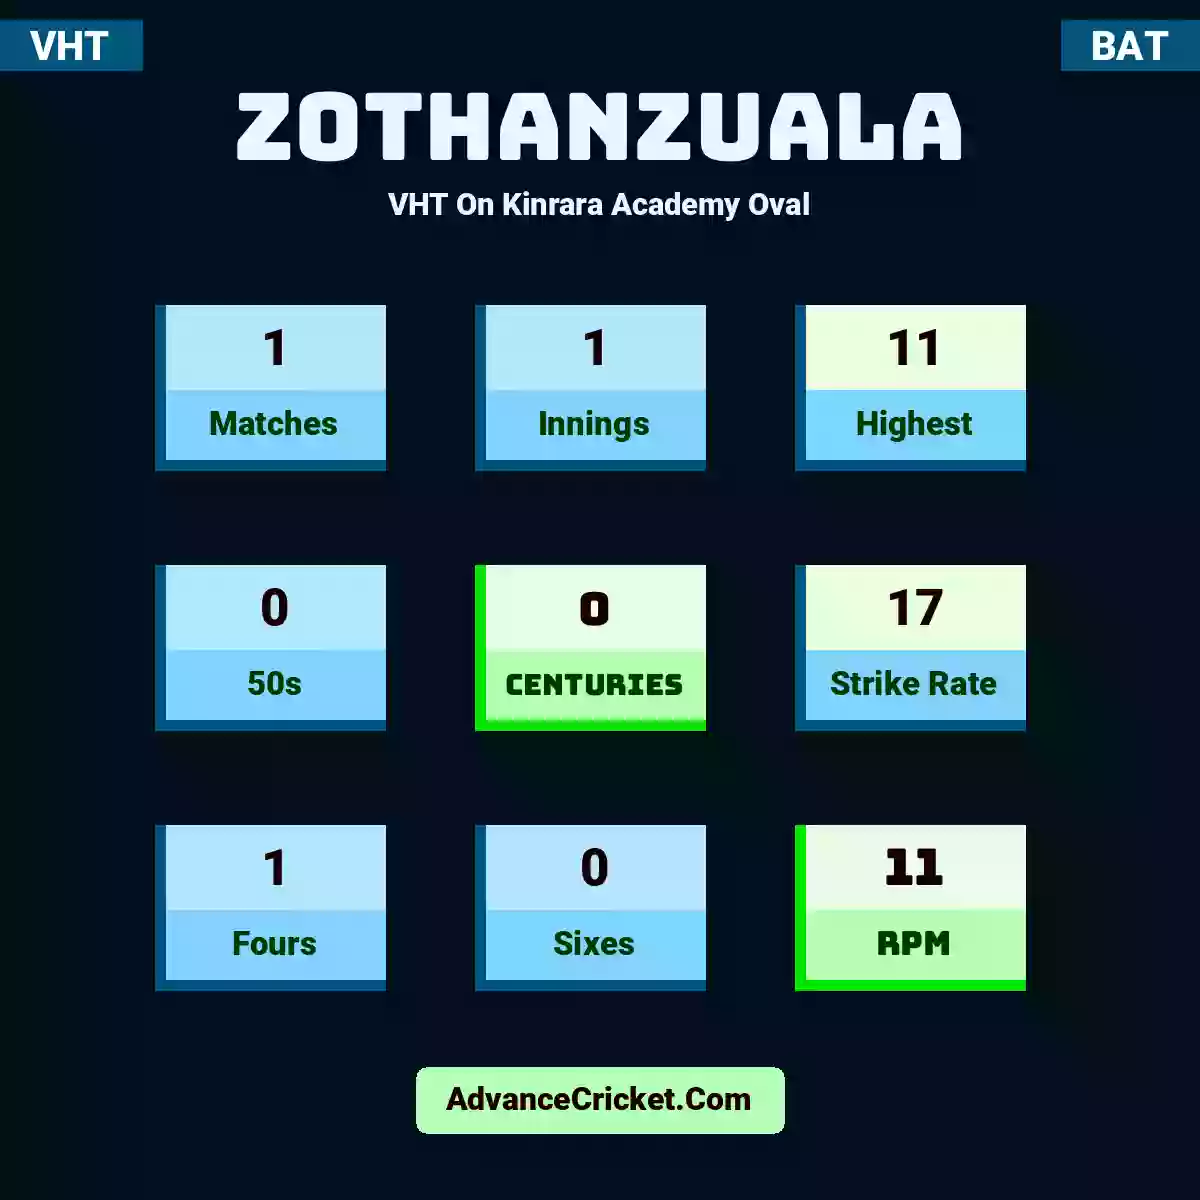 Zothanzuala VHT  On Kinrara Academy Oval, Zothanzuala played 1 matches, scored 11 runs as highest, 0 half-centuries, and 0 centuries, with a strike rate of 17. Zothanzuala hit 1 fours and 0 sixes, with an RPM of 11.